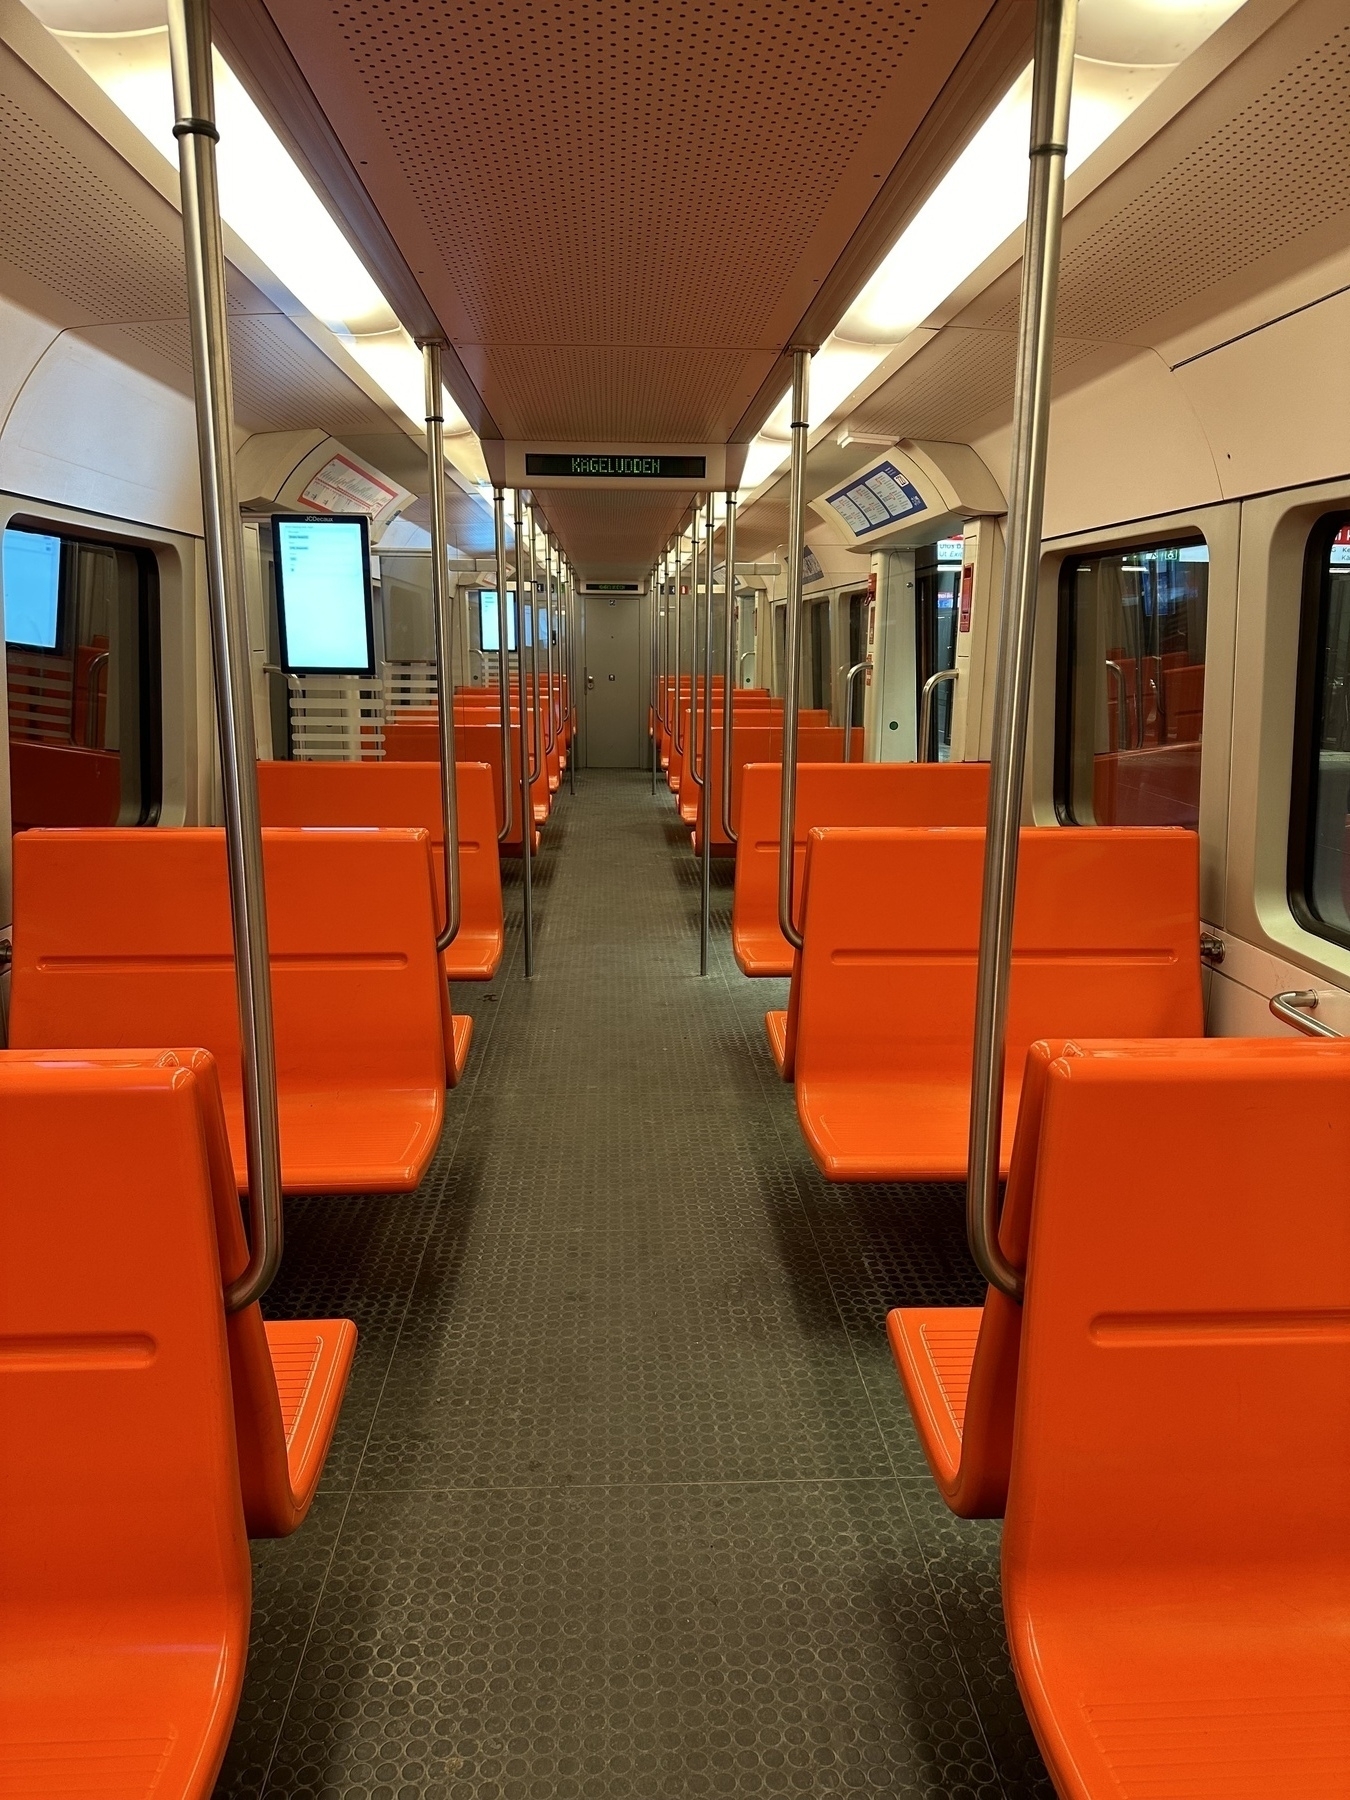 Helsinki metro car empty